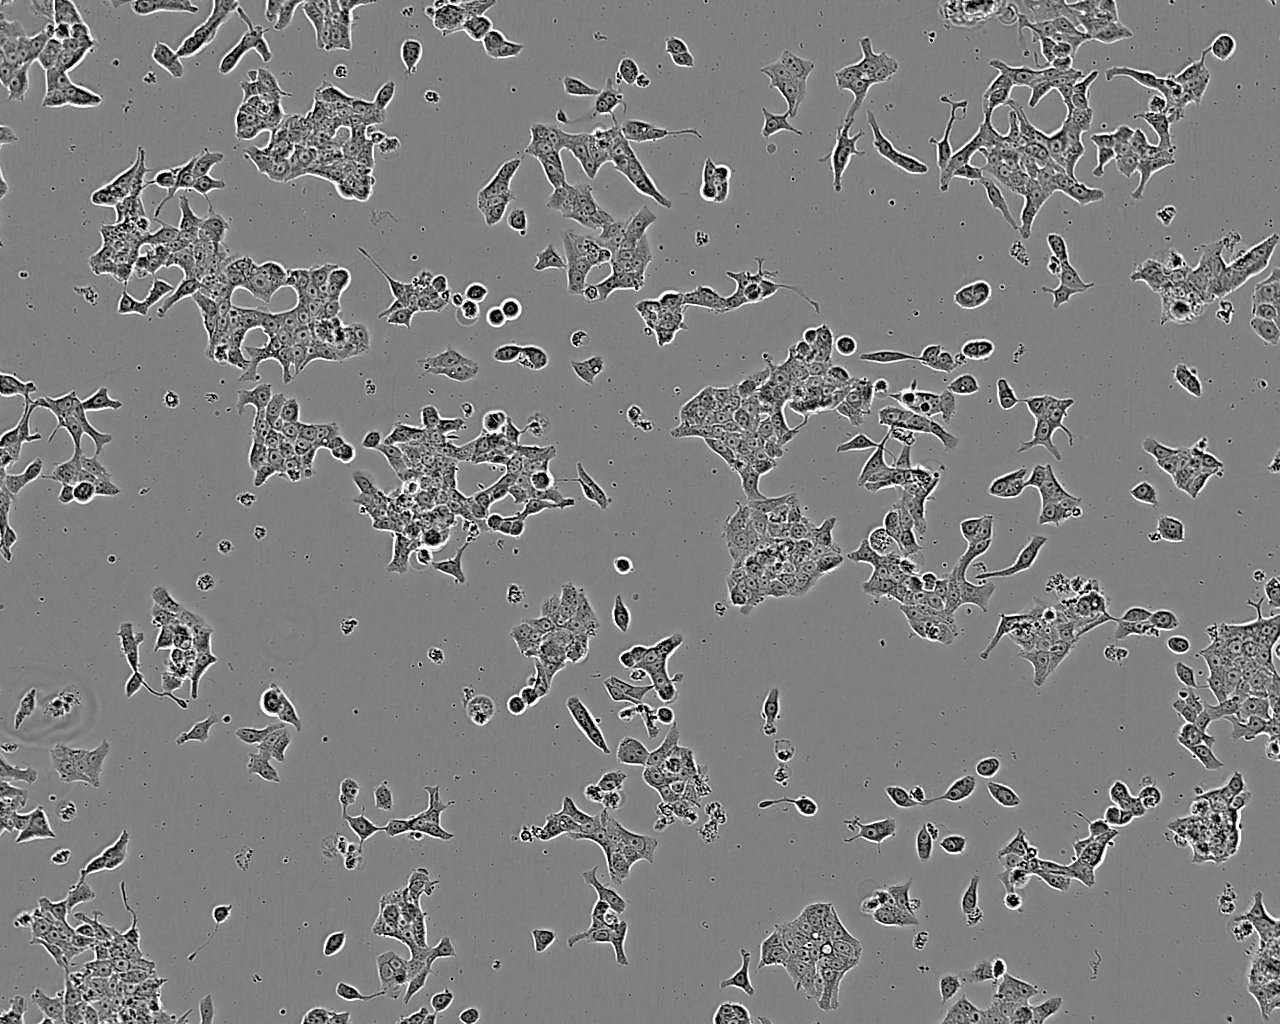 ARPE-19 Cell:人视网膜色素上皮细胞系,ARPE-19 Cell